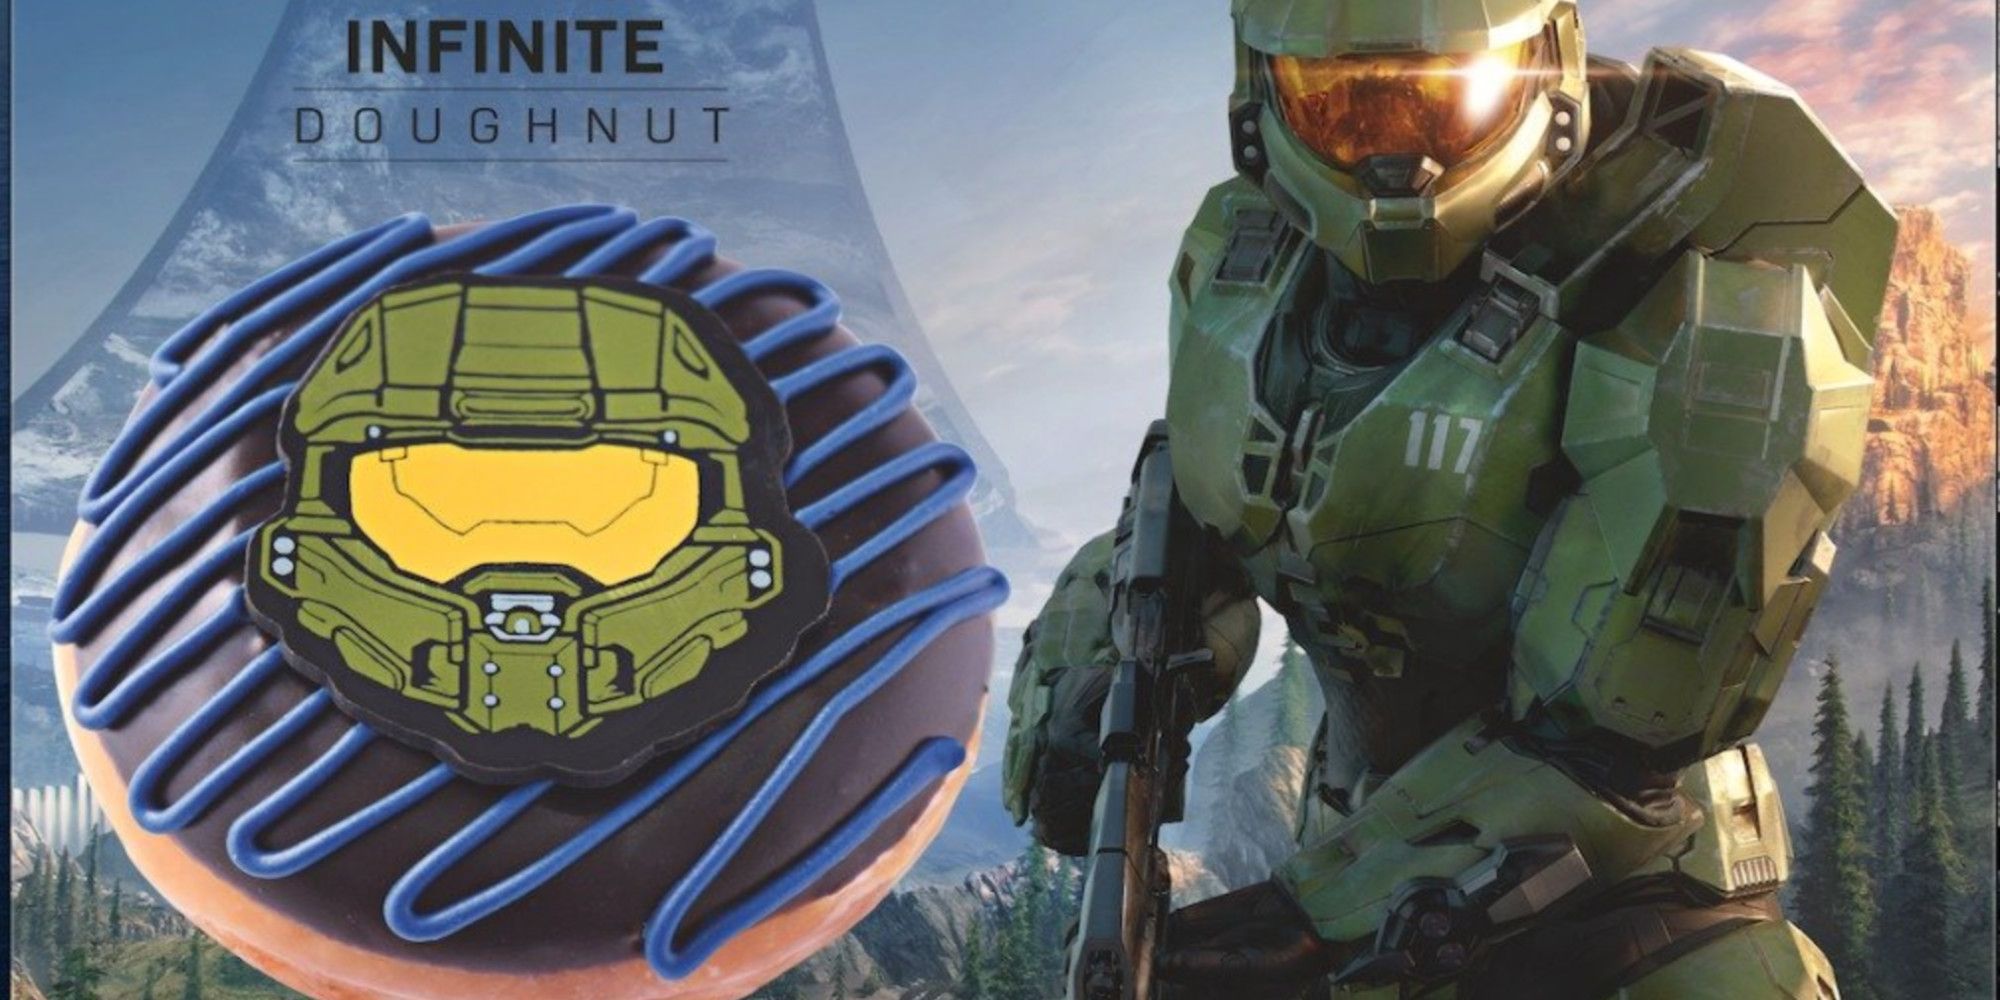 Halo Infinite Launches In November, According To Doughnut Advert